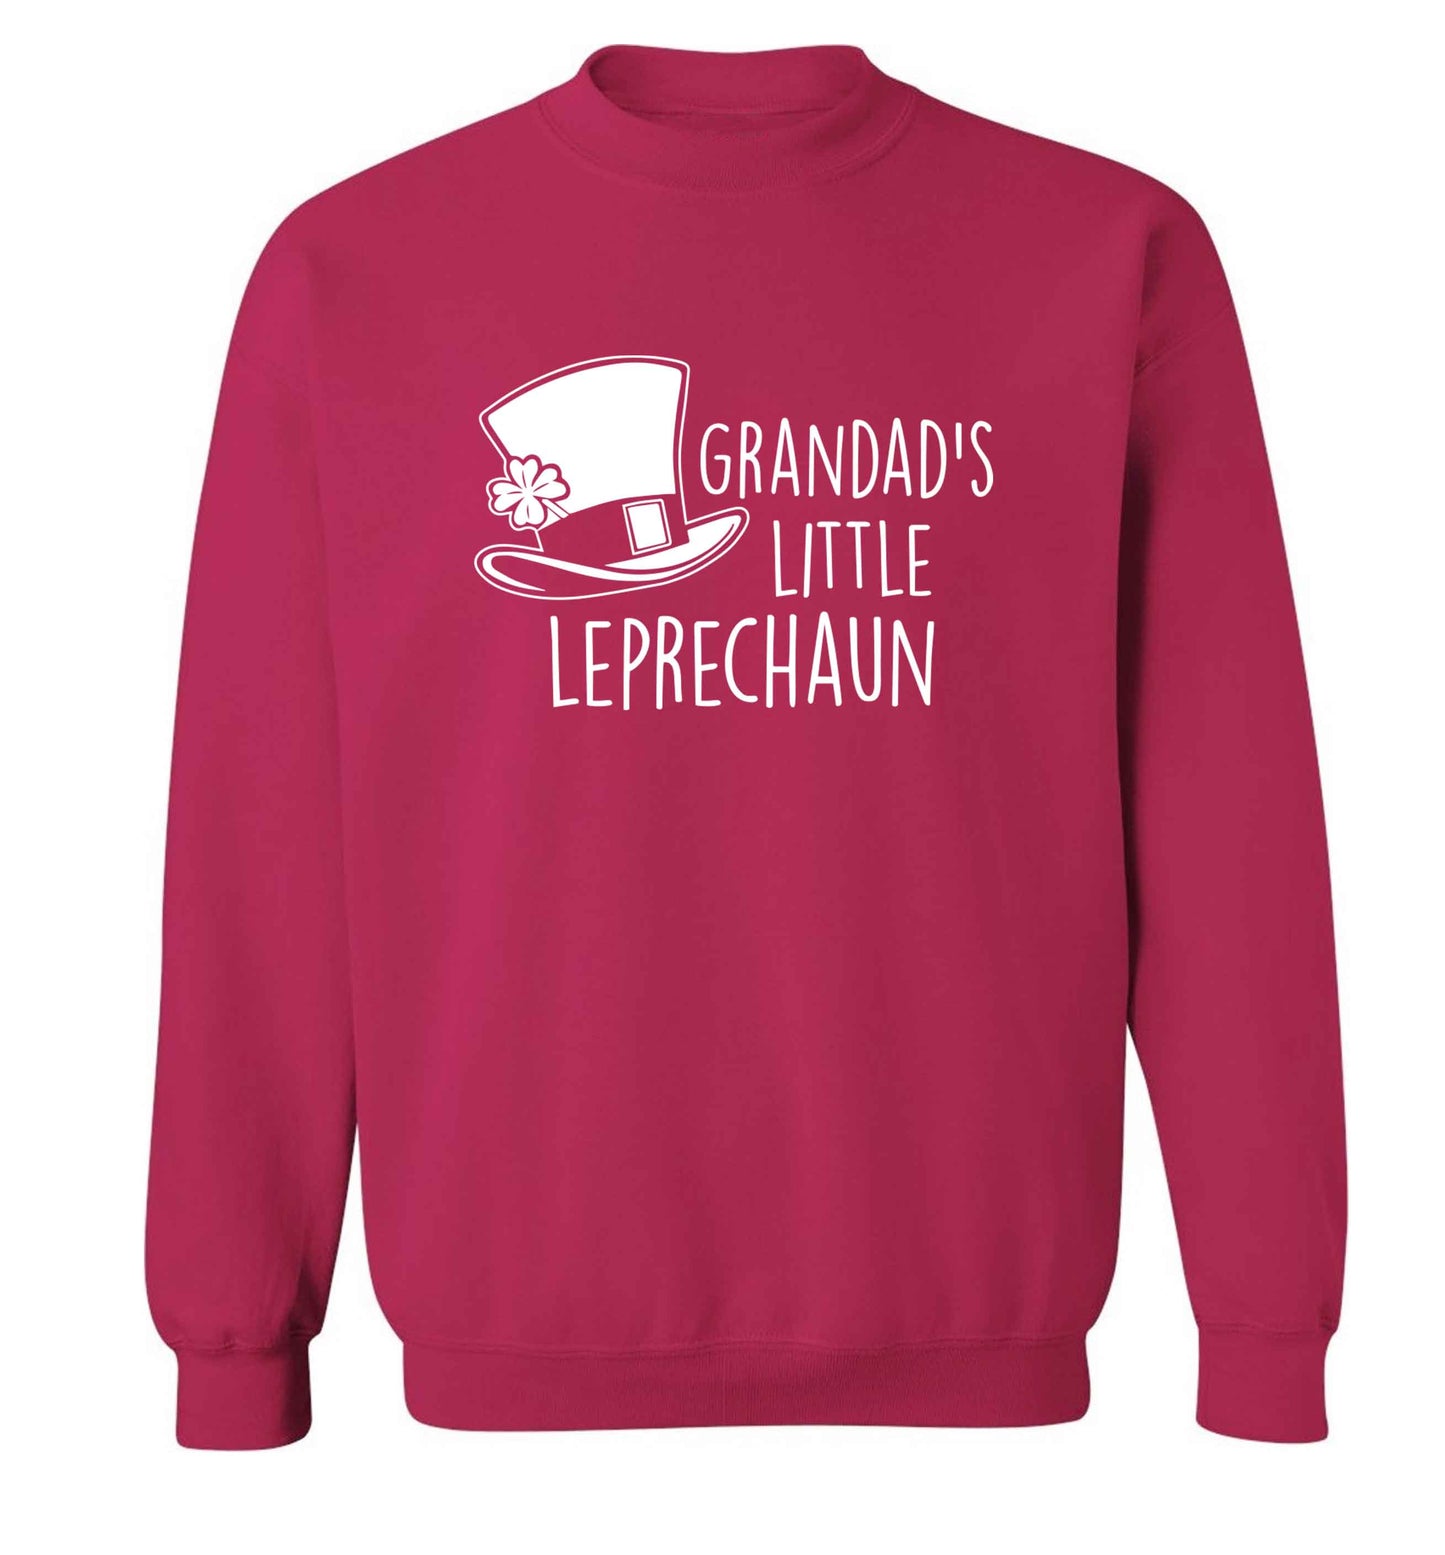 Grandad's little leprechaun adult's unisex pink sweater 2XL